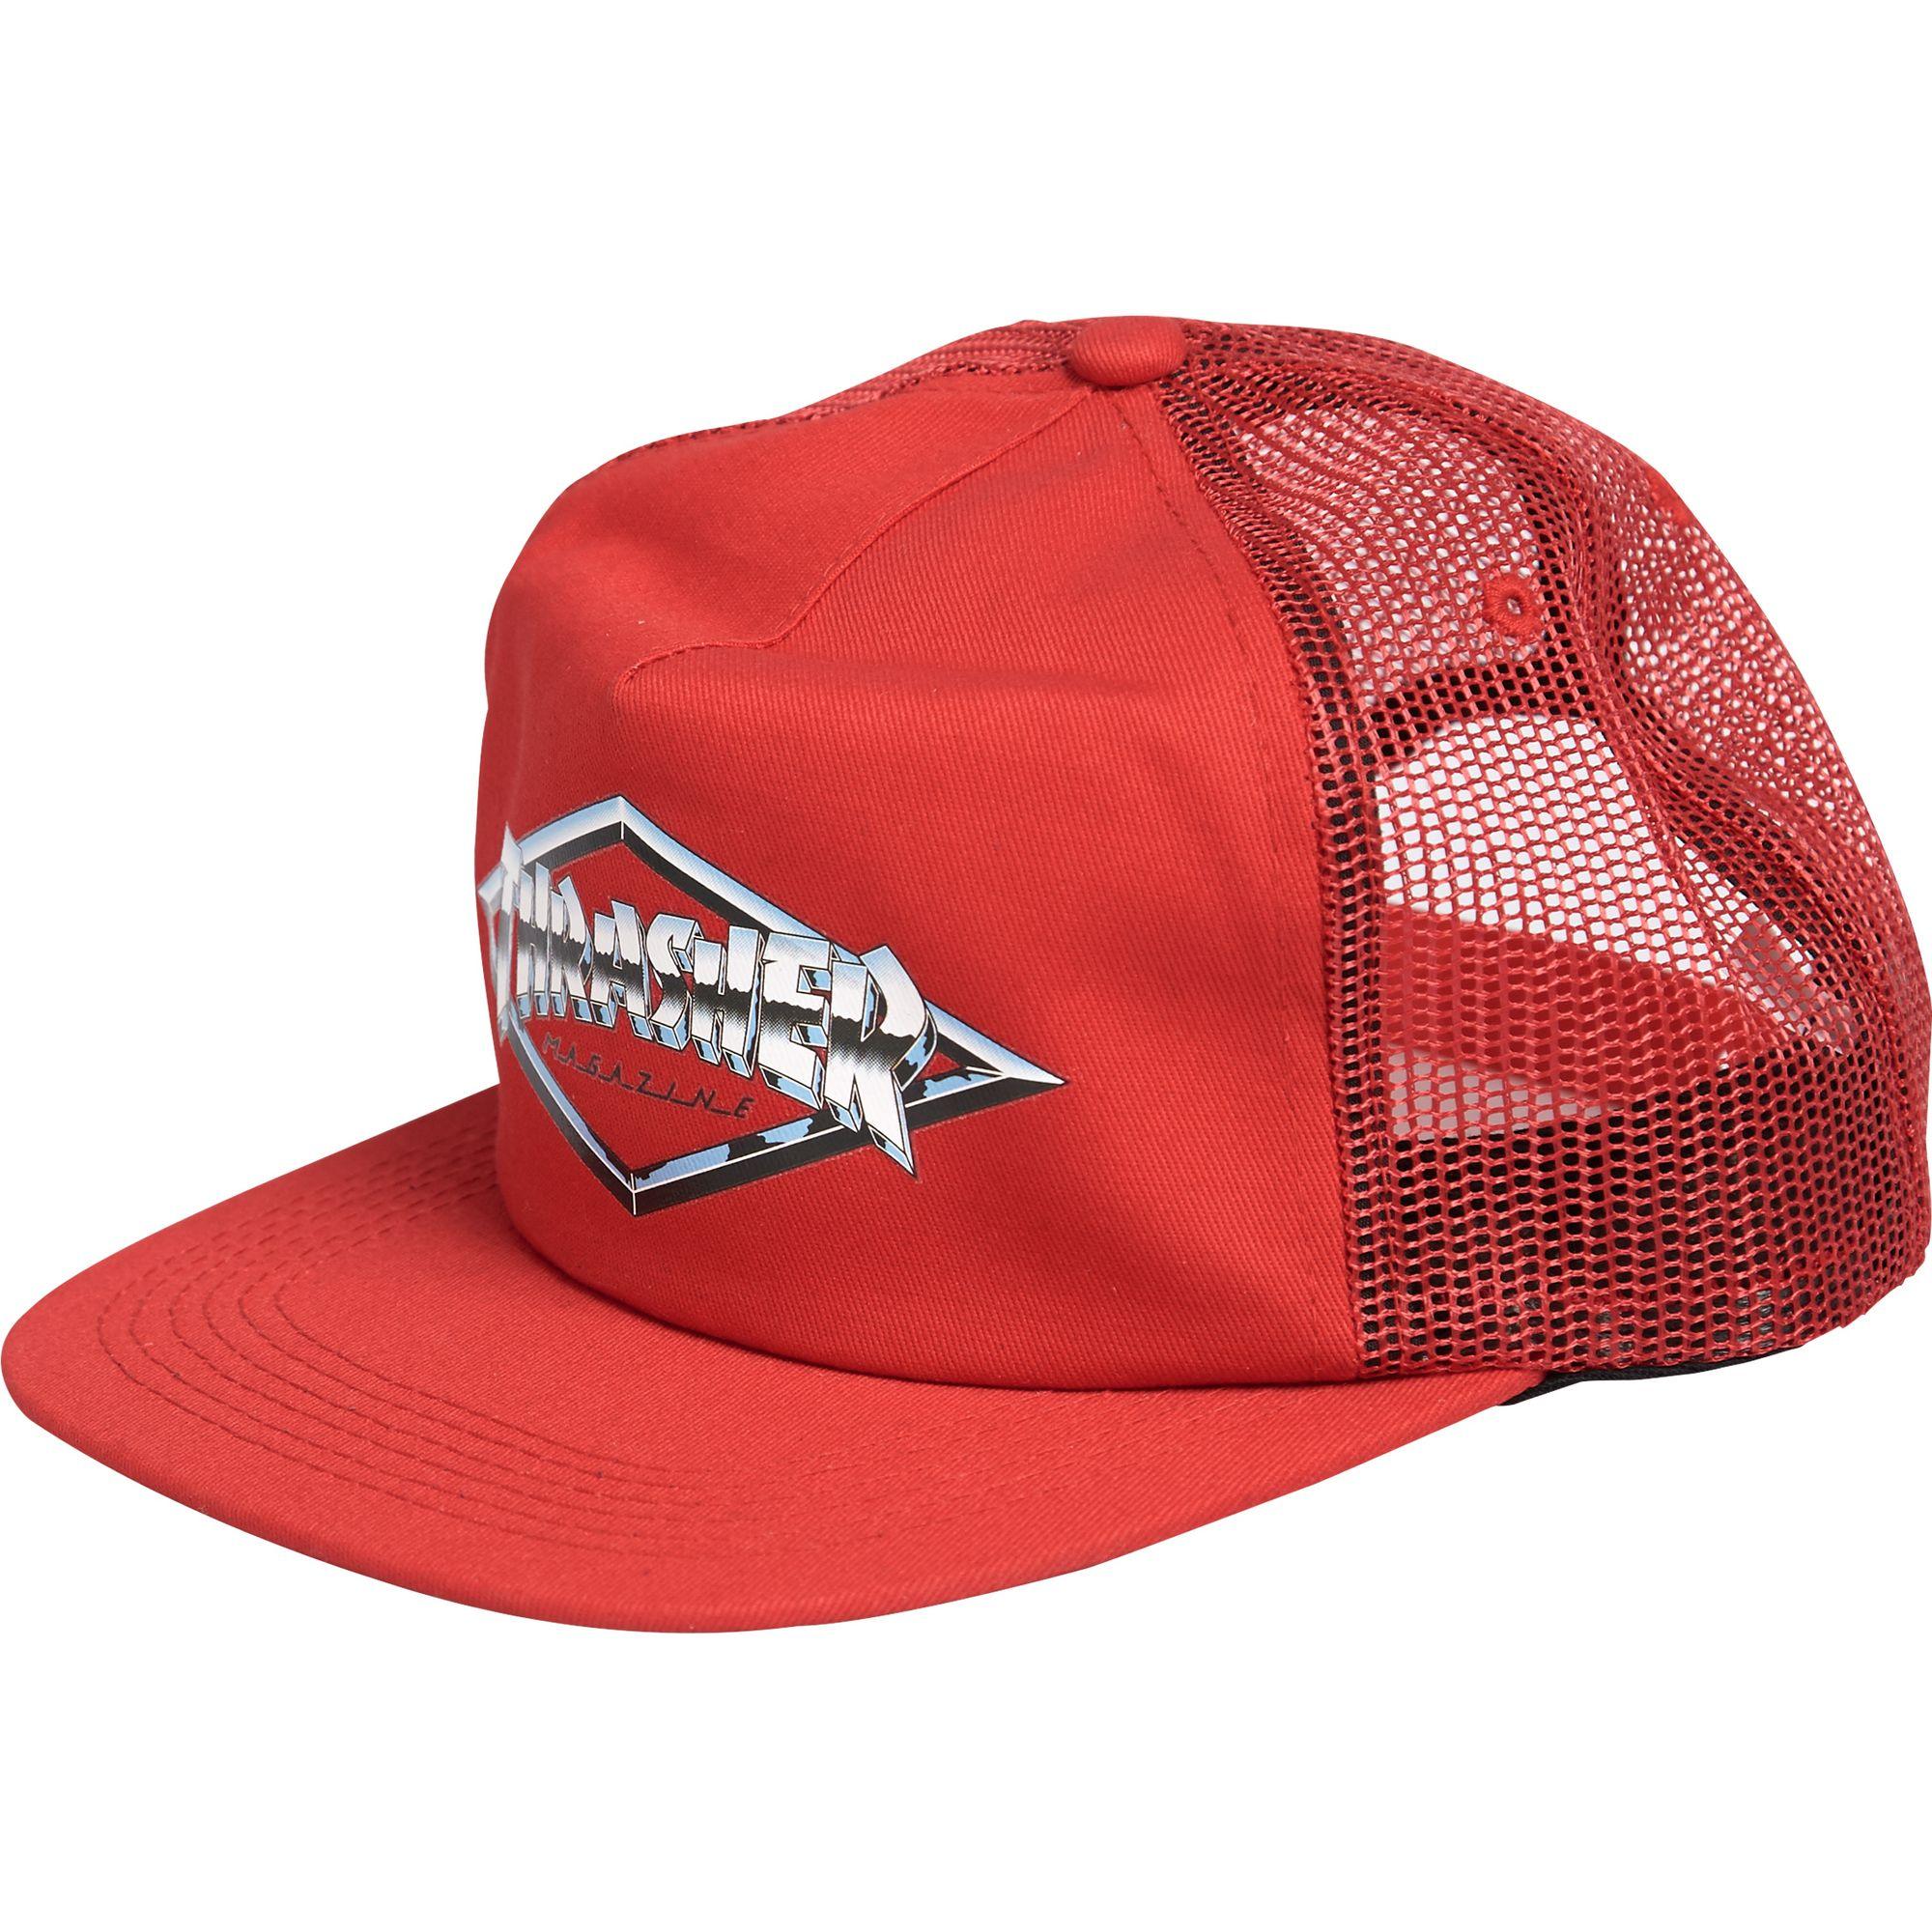 Two Red Diamond Logo - Two Seasons - Diamond Emblem Trucker Cap